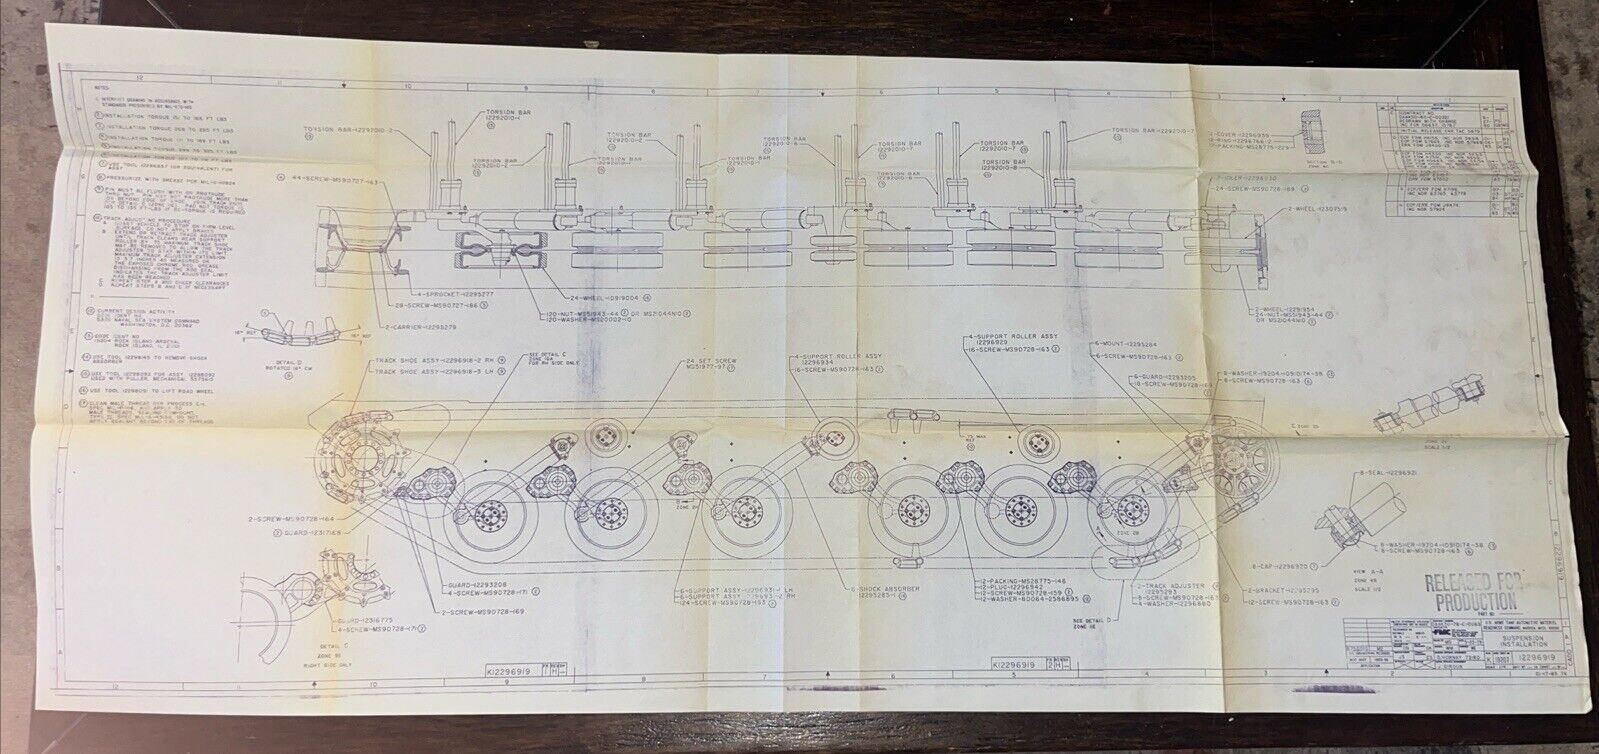 Official U.S. Army Tank Schematics Blueprints 1979 47” X 21” Readiness Command 